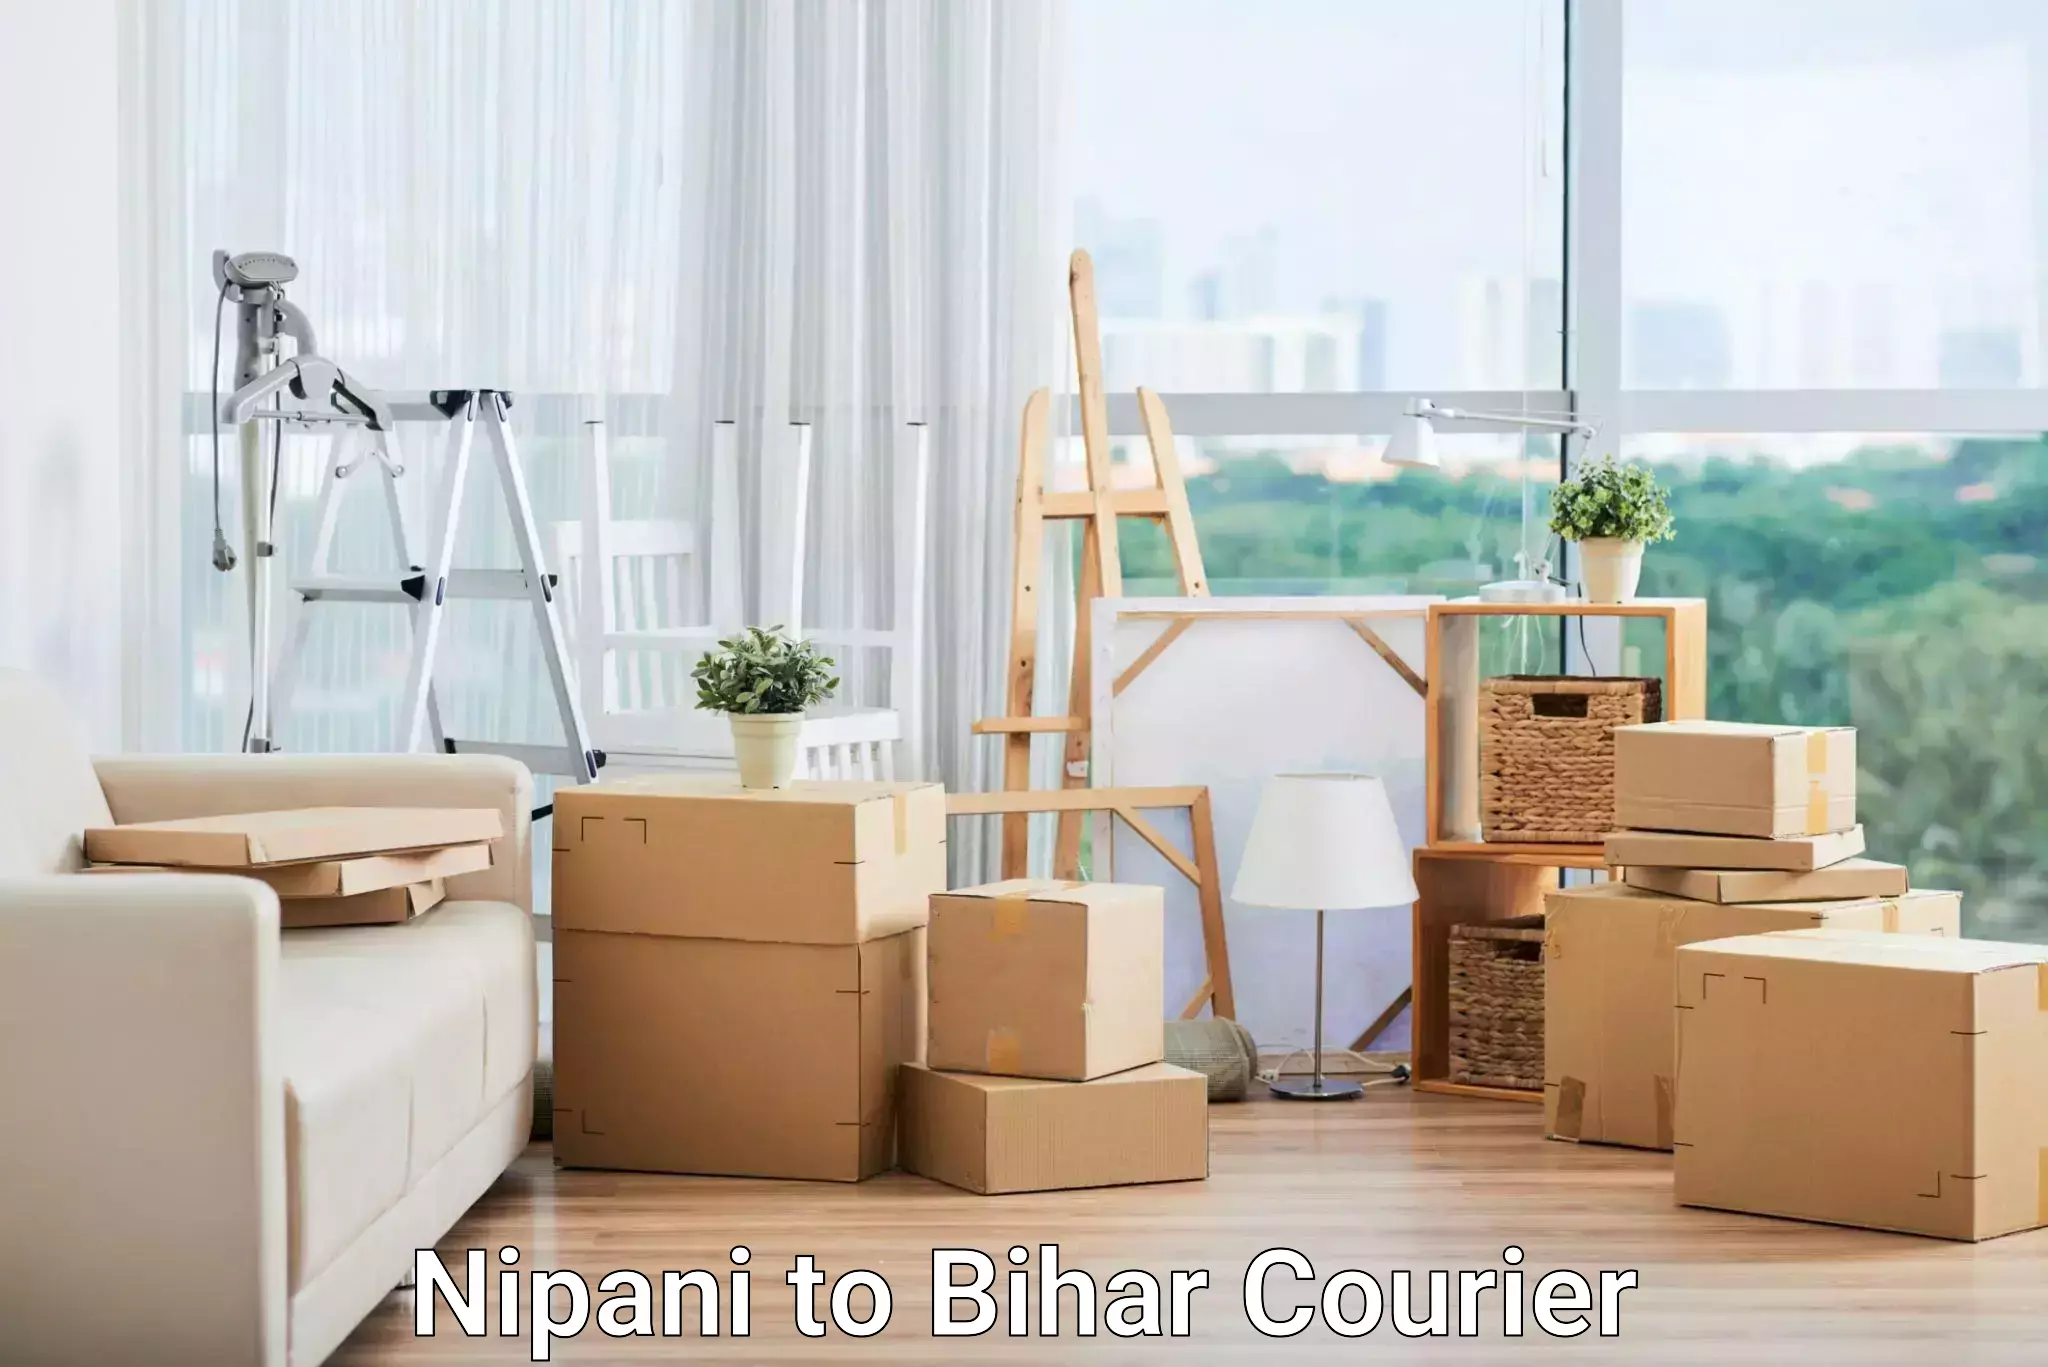 Reliable shipping partners Nipani to Bihar